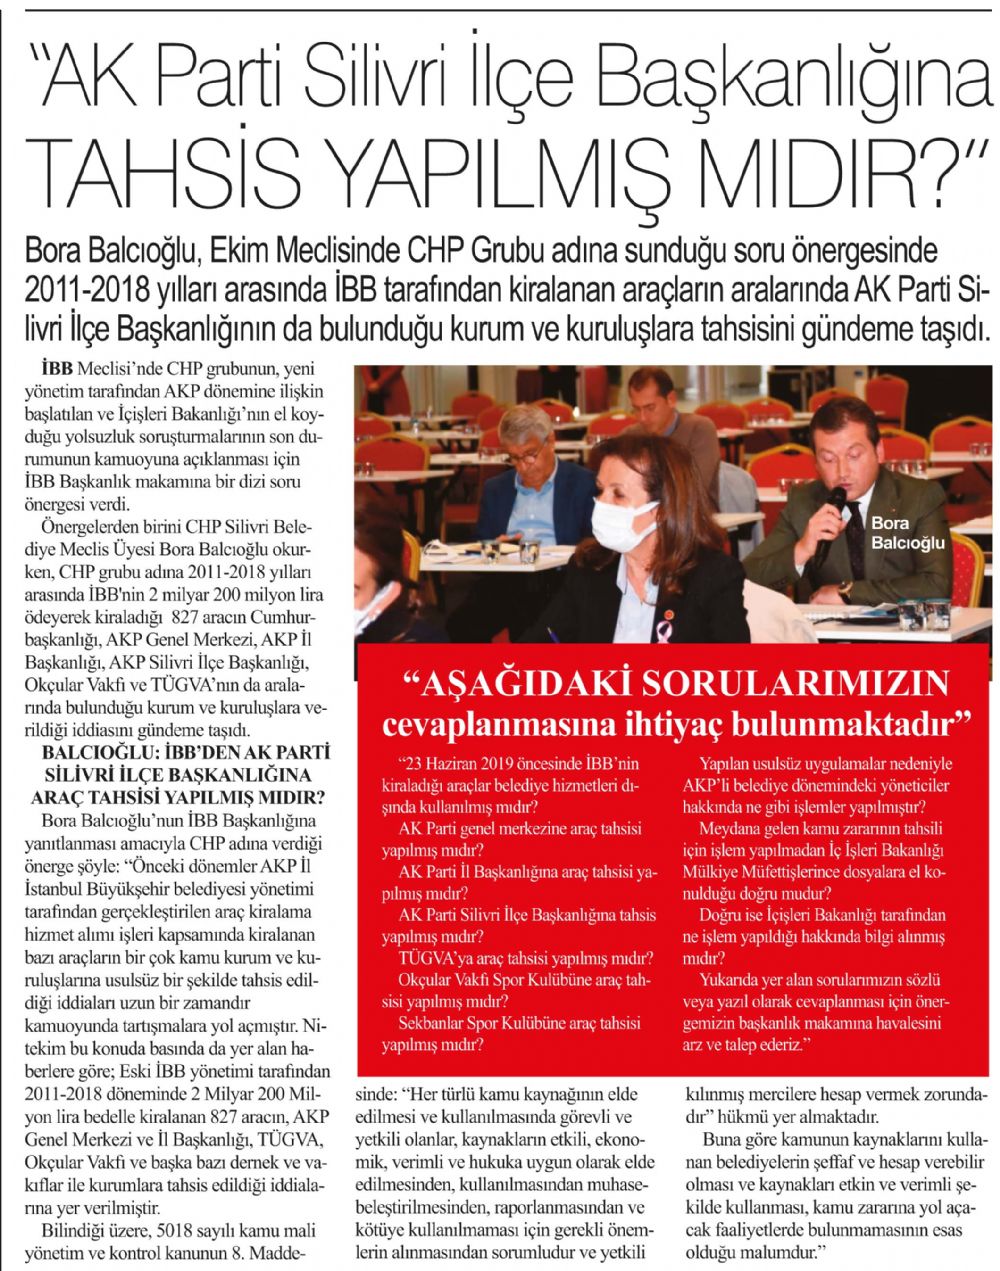 “AK Parti Silivri İlçe Başkanlığına tahsis yapılmış mıdır?”